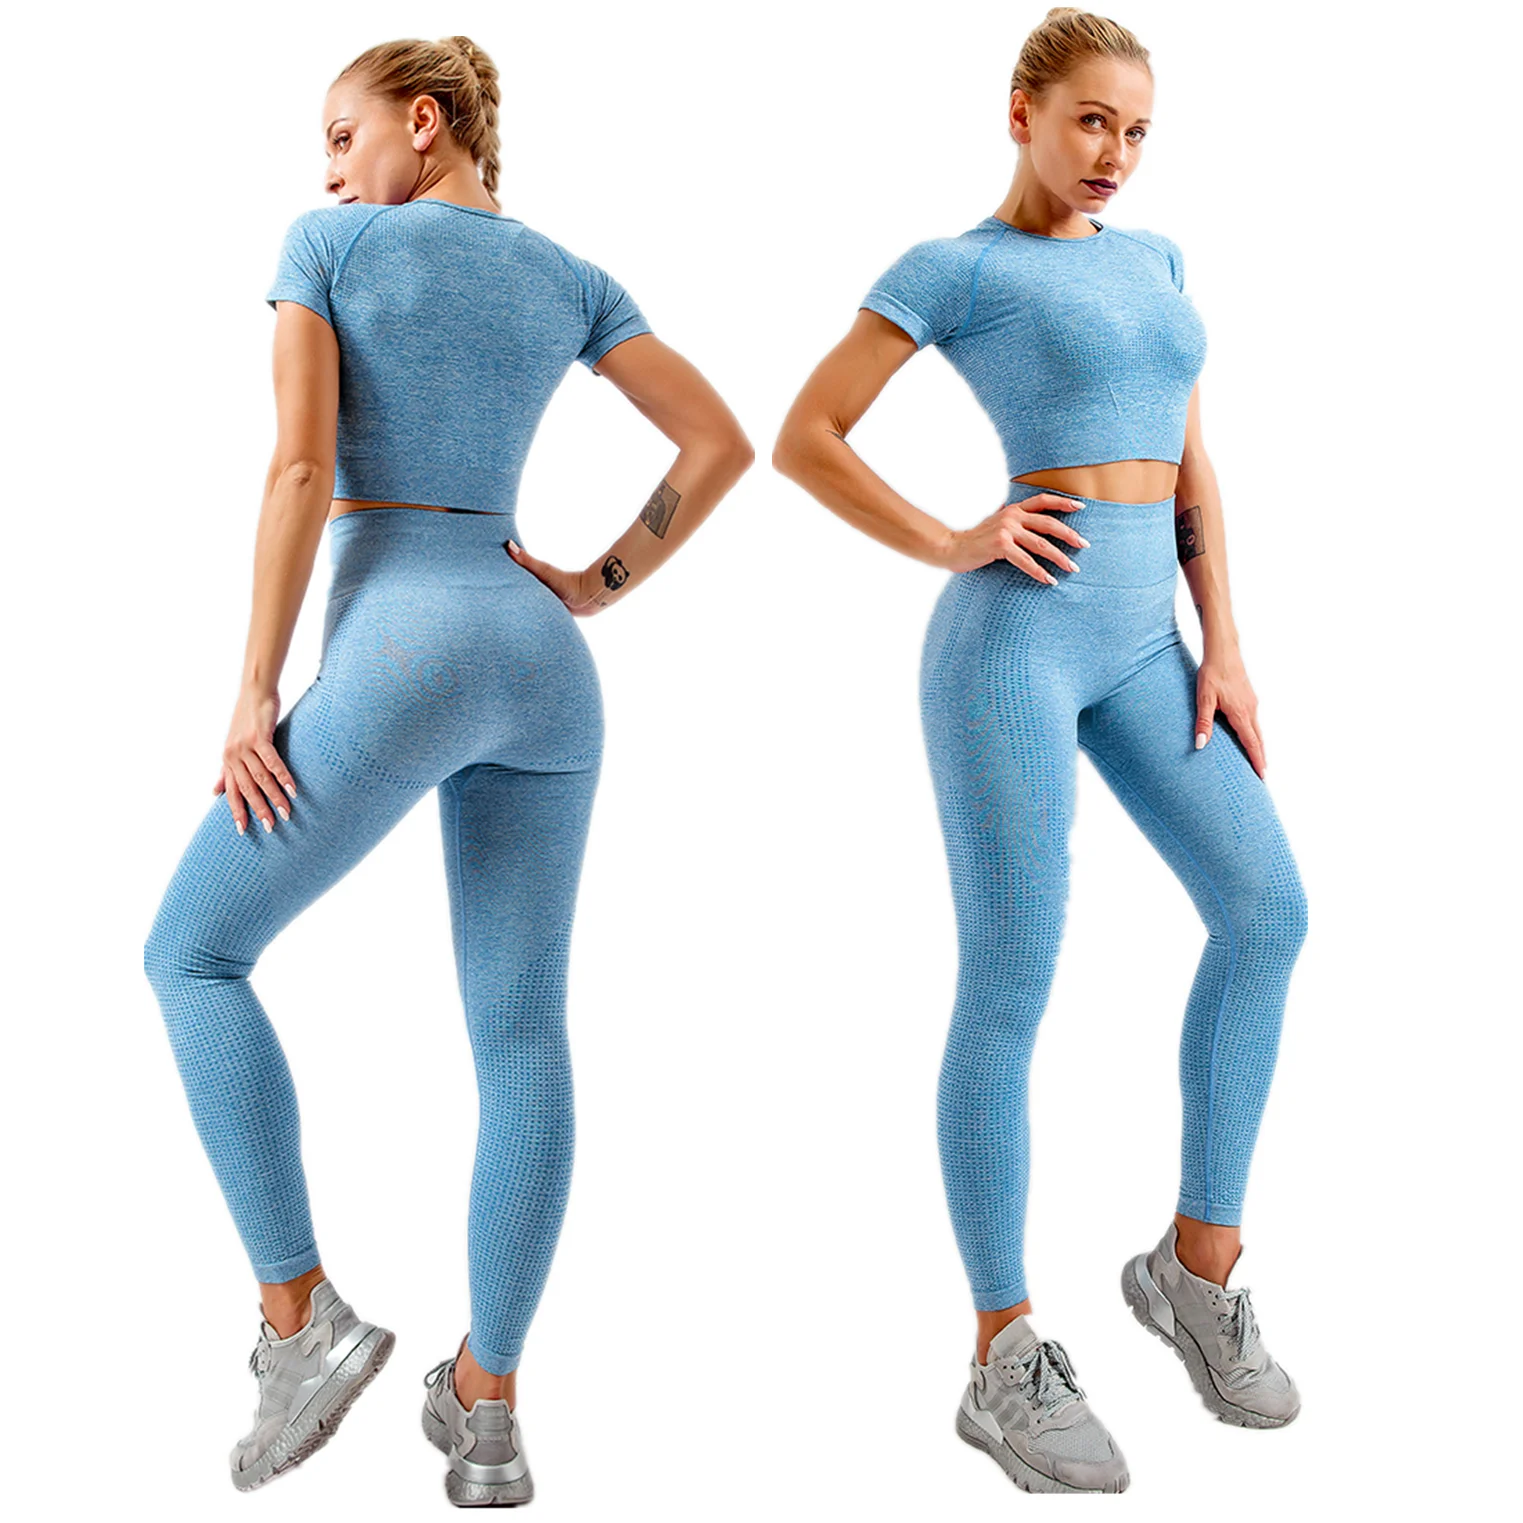 

Seamless Yoga Women Set Gym SportWear Running Outwork Clothing Fitness Long SLeeve Shirt High Waist Legging Sport Tracksui